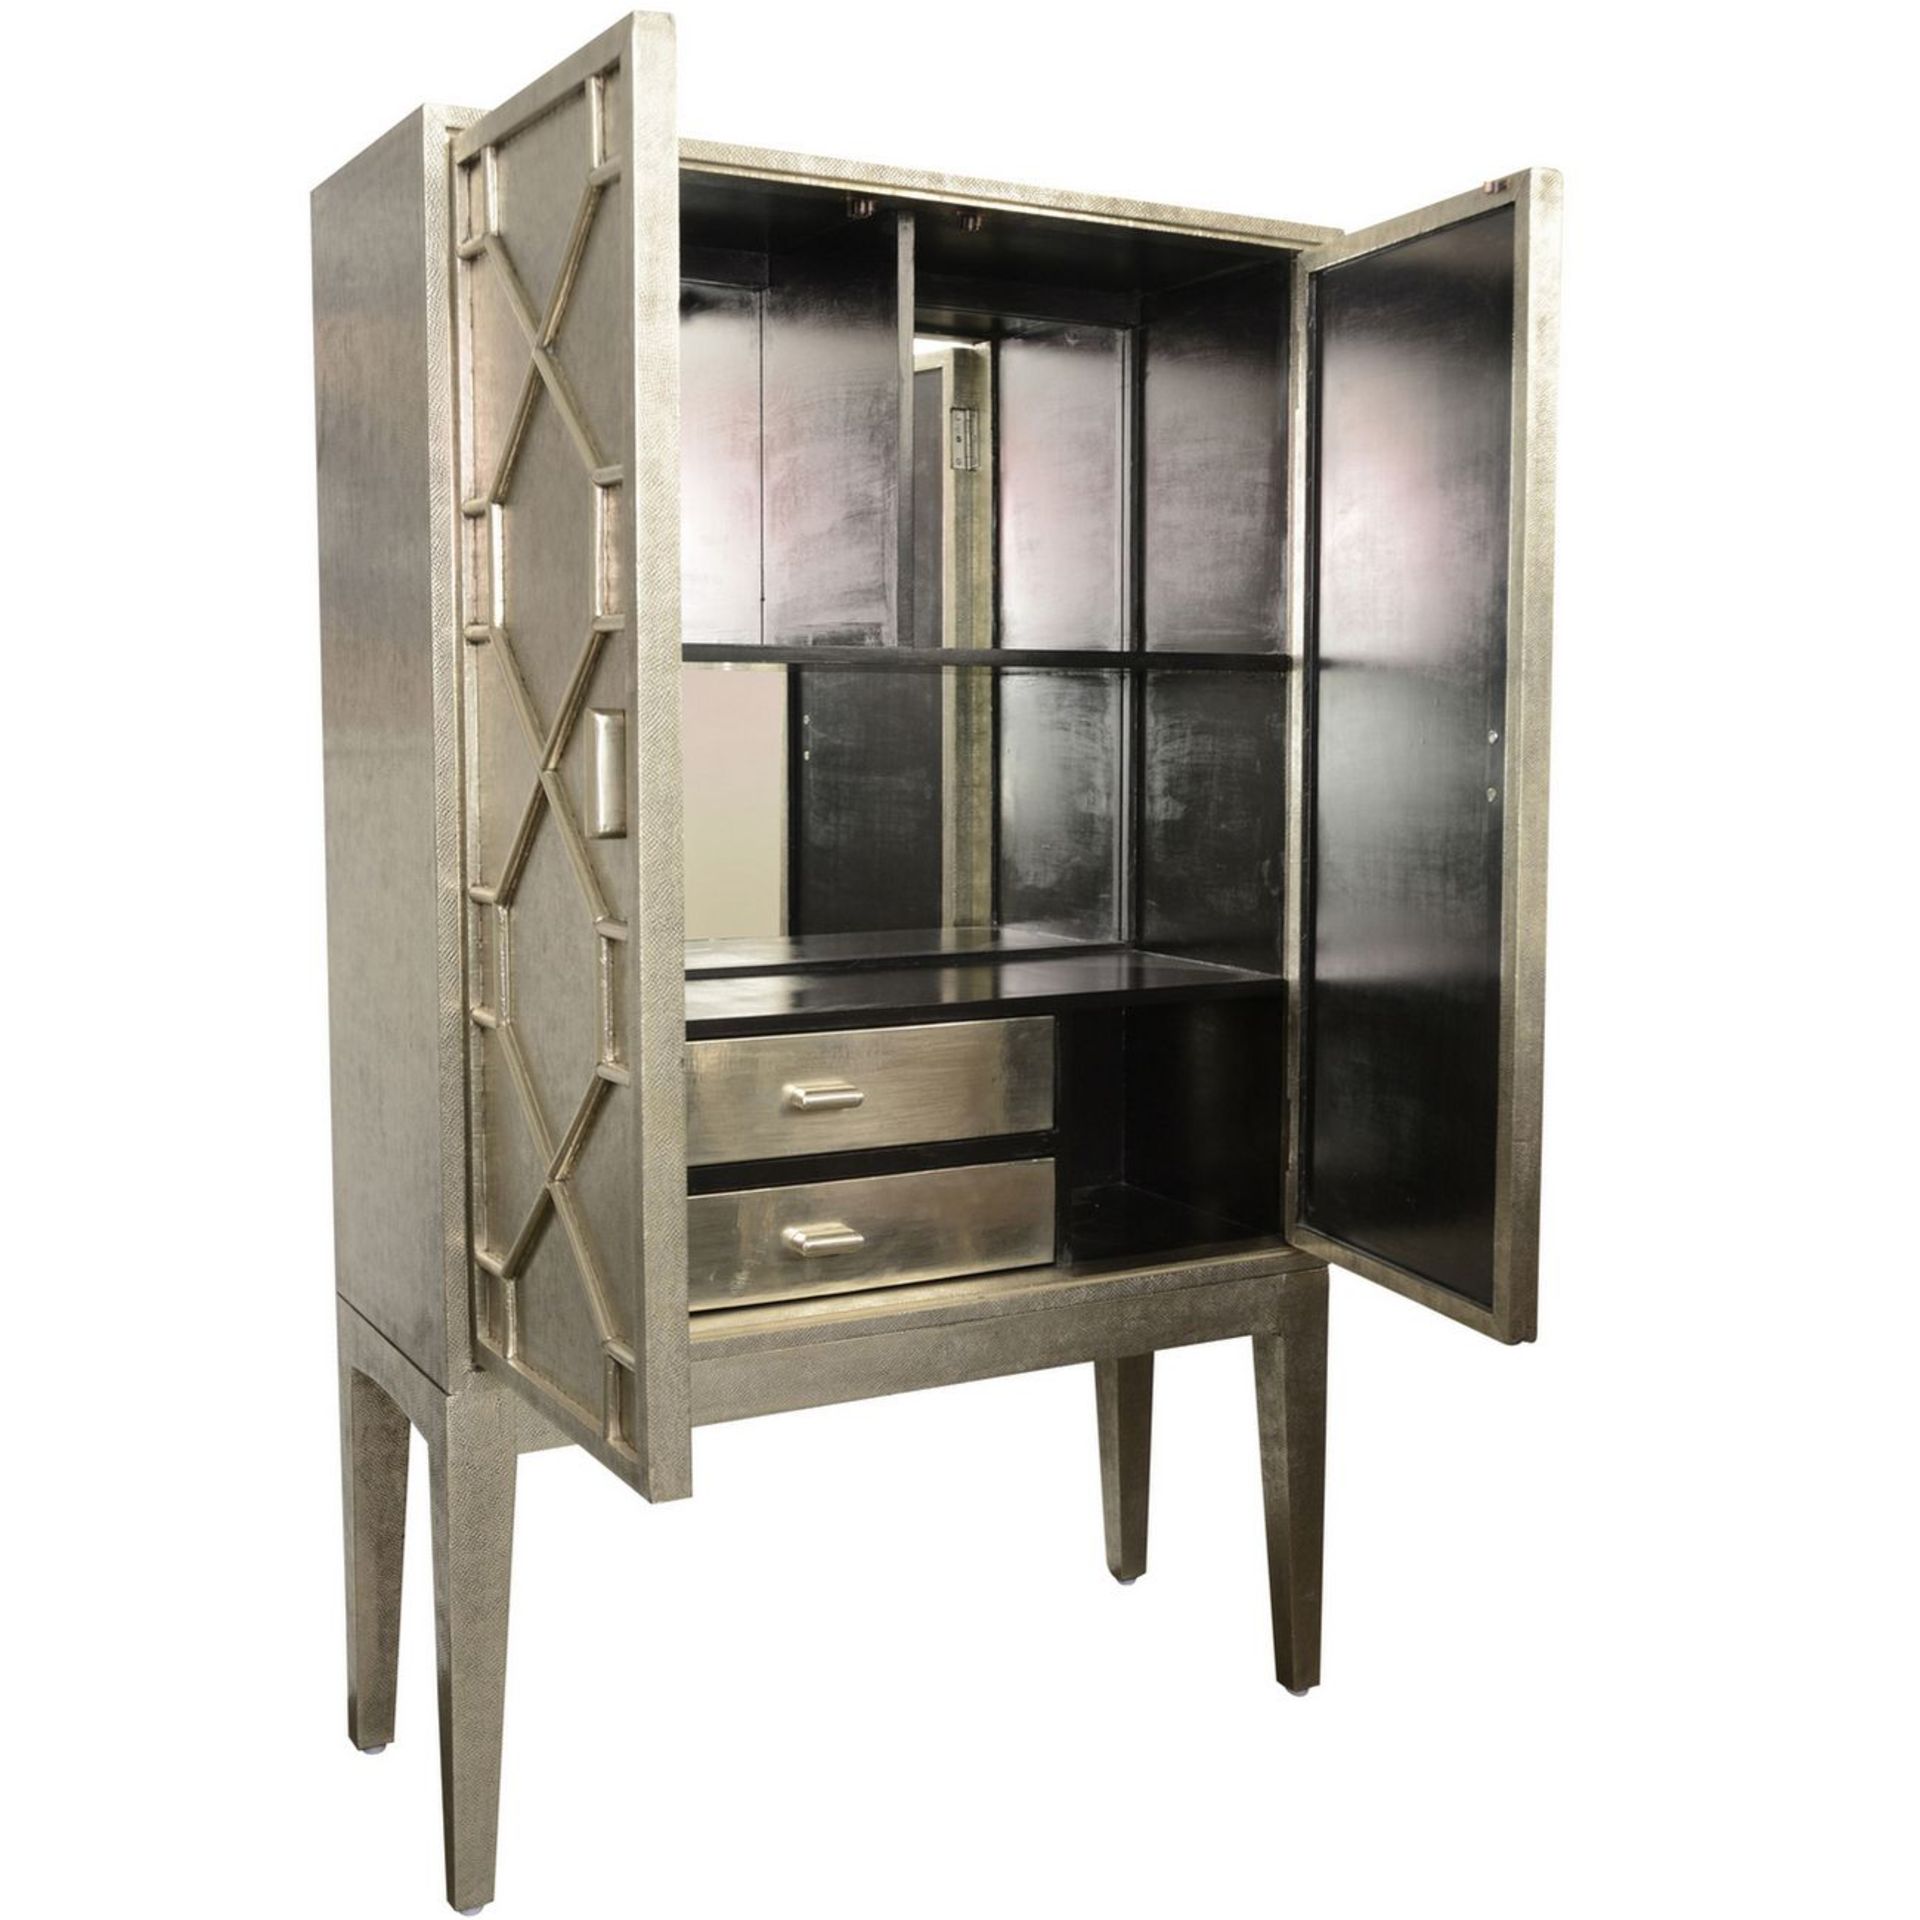 Astor Hand Embossed Metal Bar Cabinet - Image 2 of 2